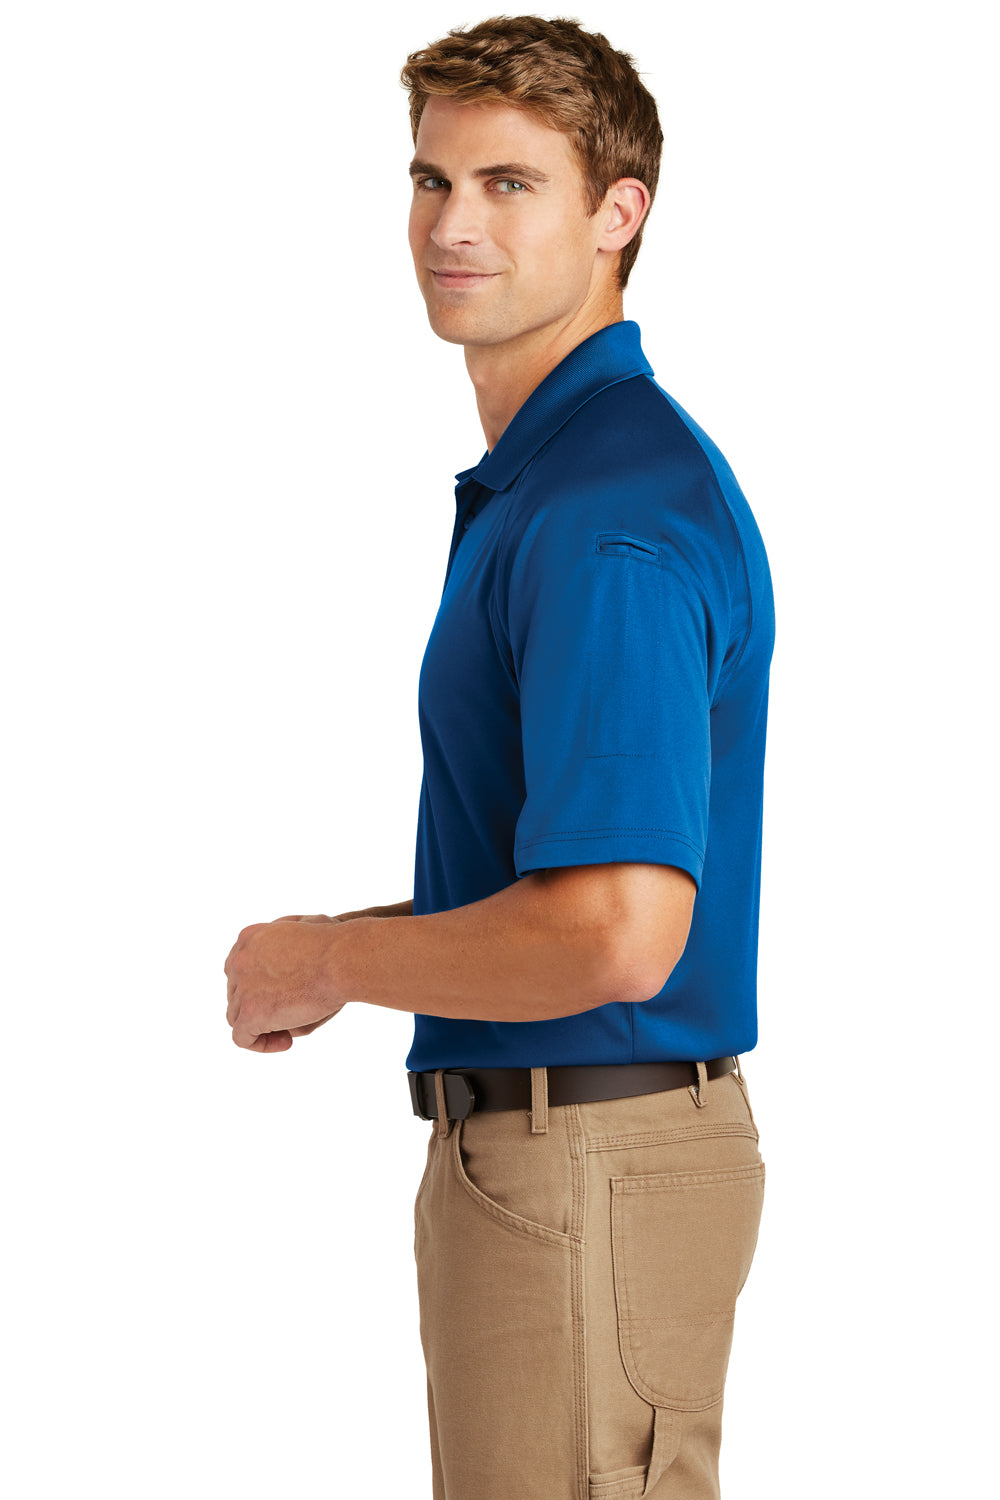 CornerStone CS410 Mens Select Tactical Moisture Wicking Short Sleeve Polo Shirt Royal Blue Side